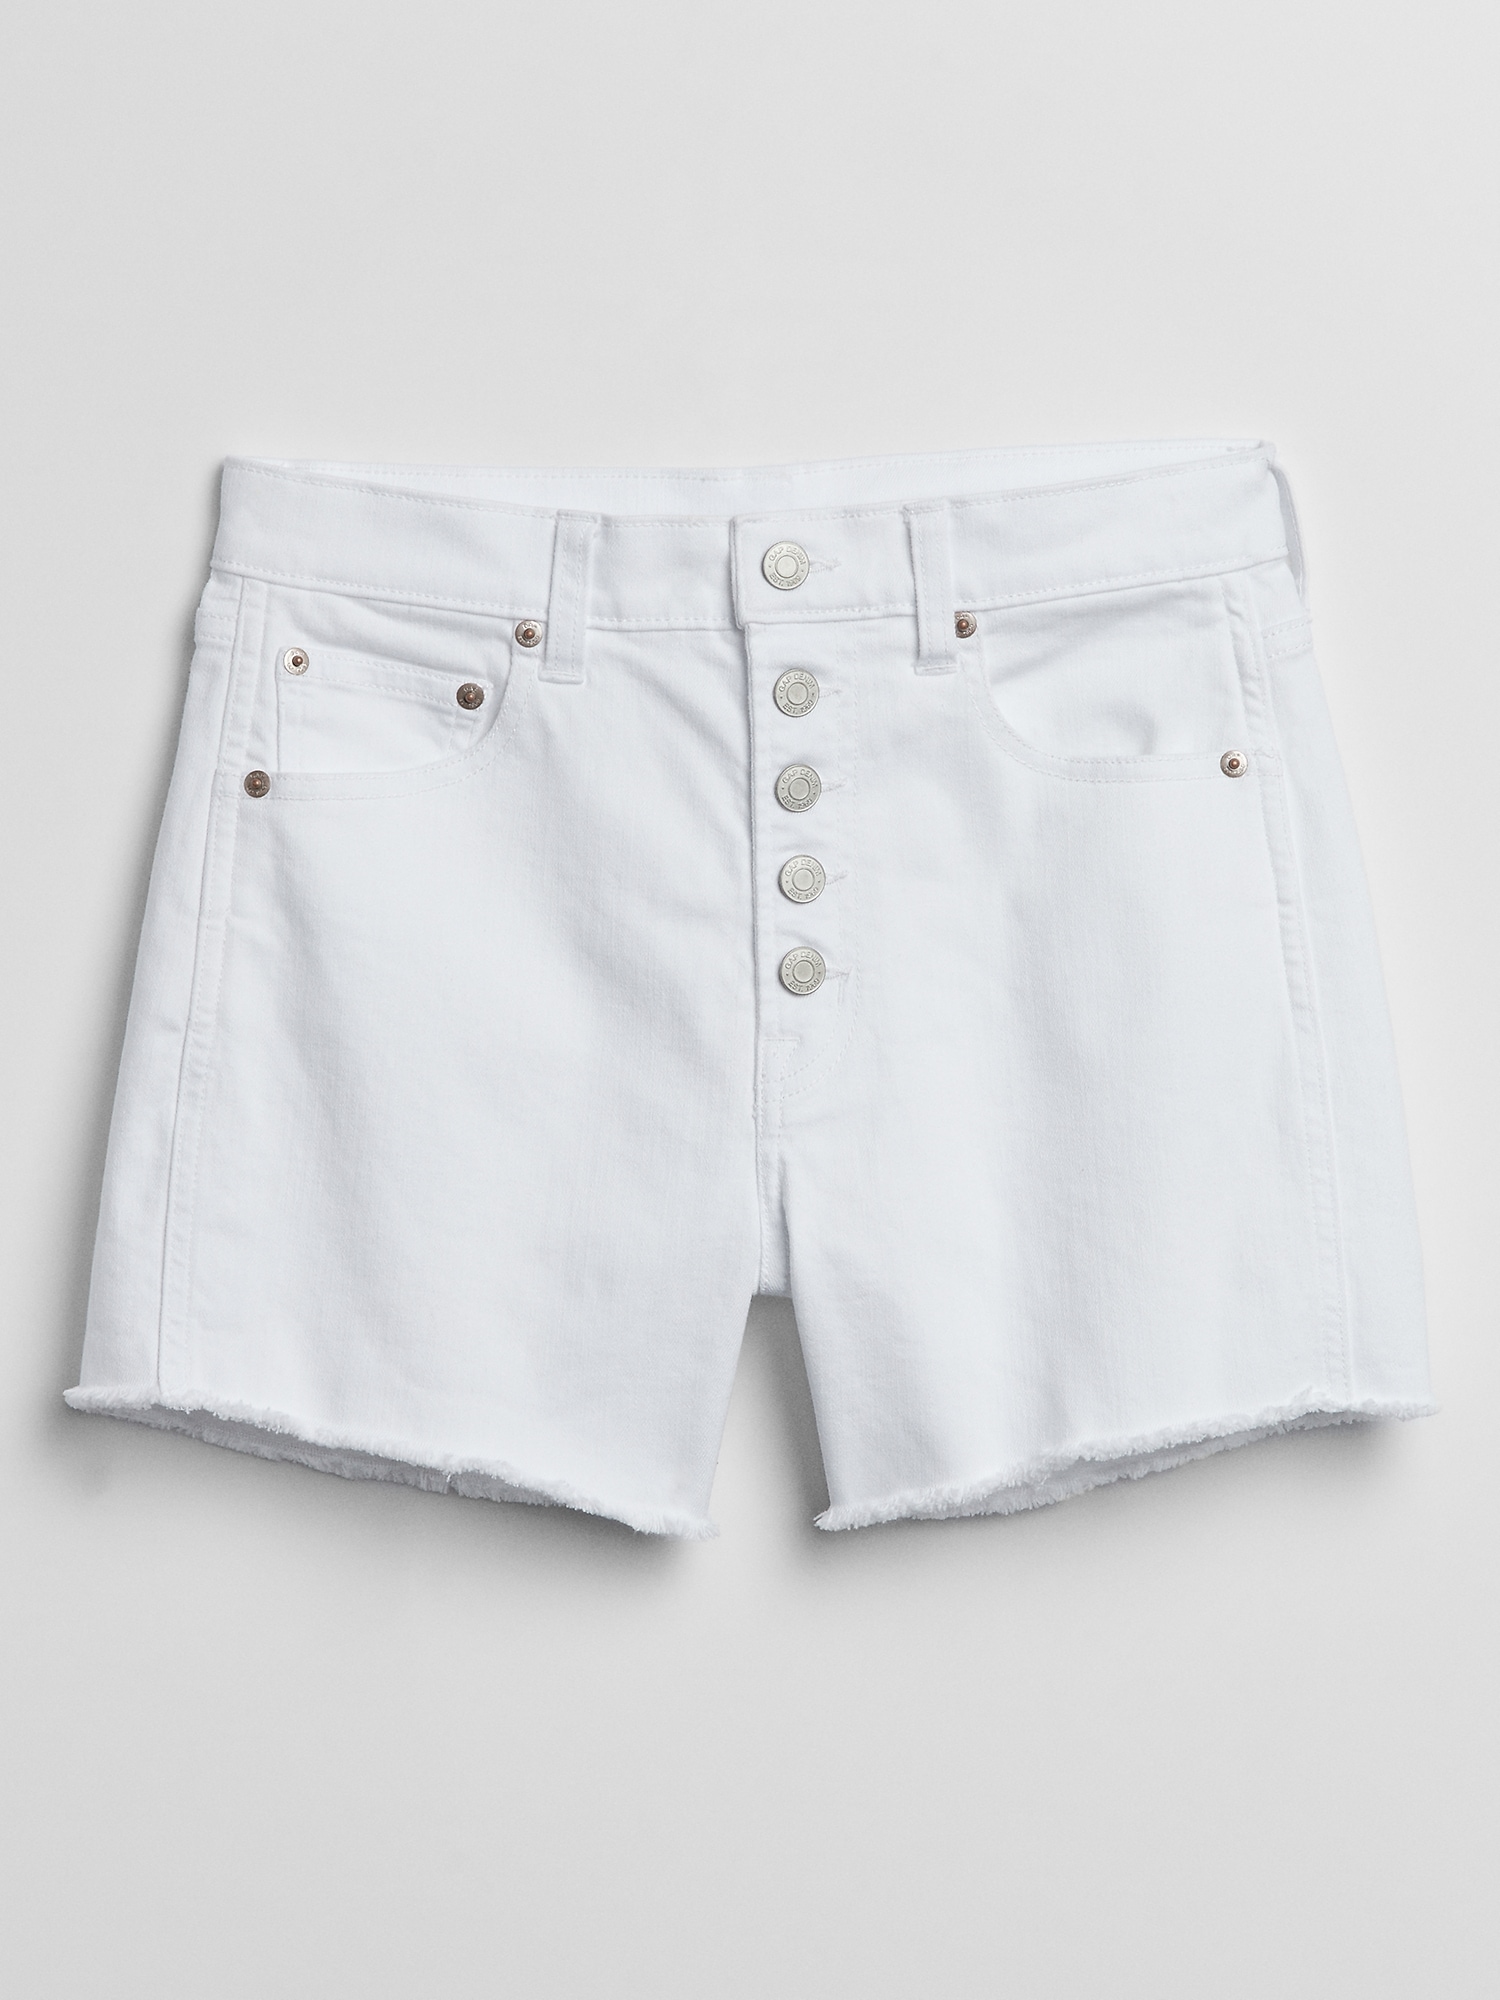 white high waisted shorts womens